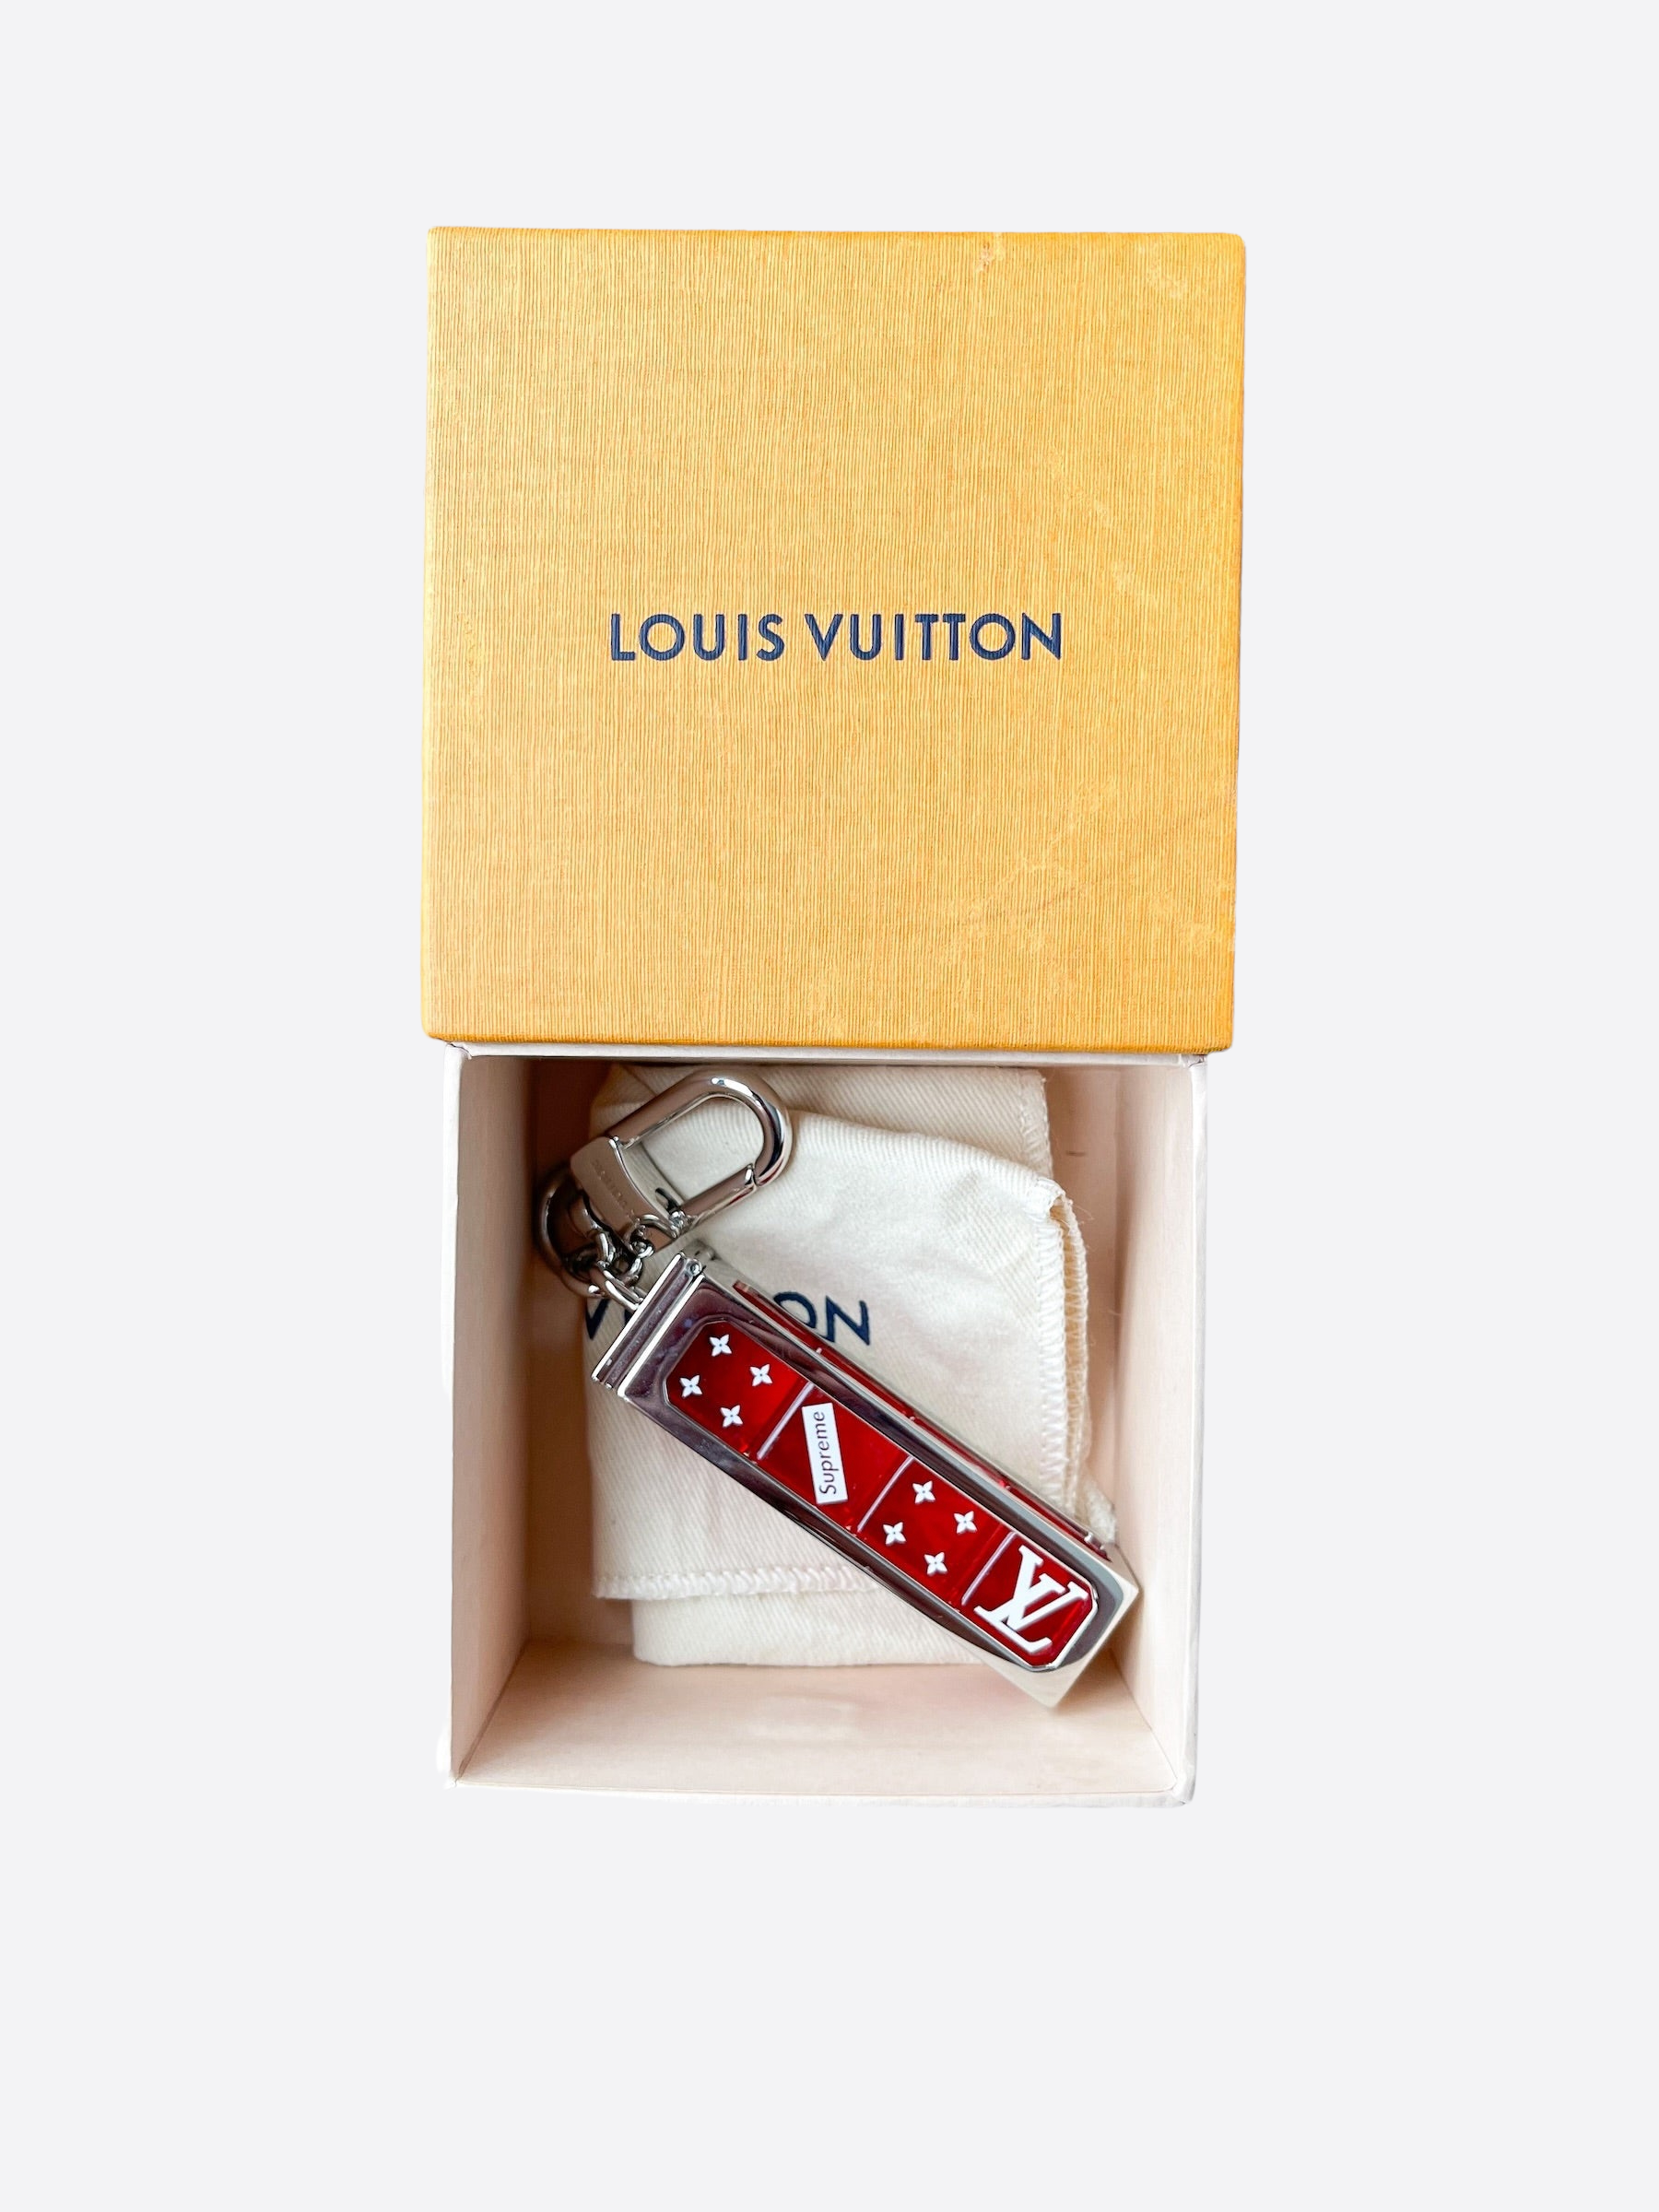 LOUIS VUITTON X SUPREME Dice Key Chain Bag Charm Brown 213156